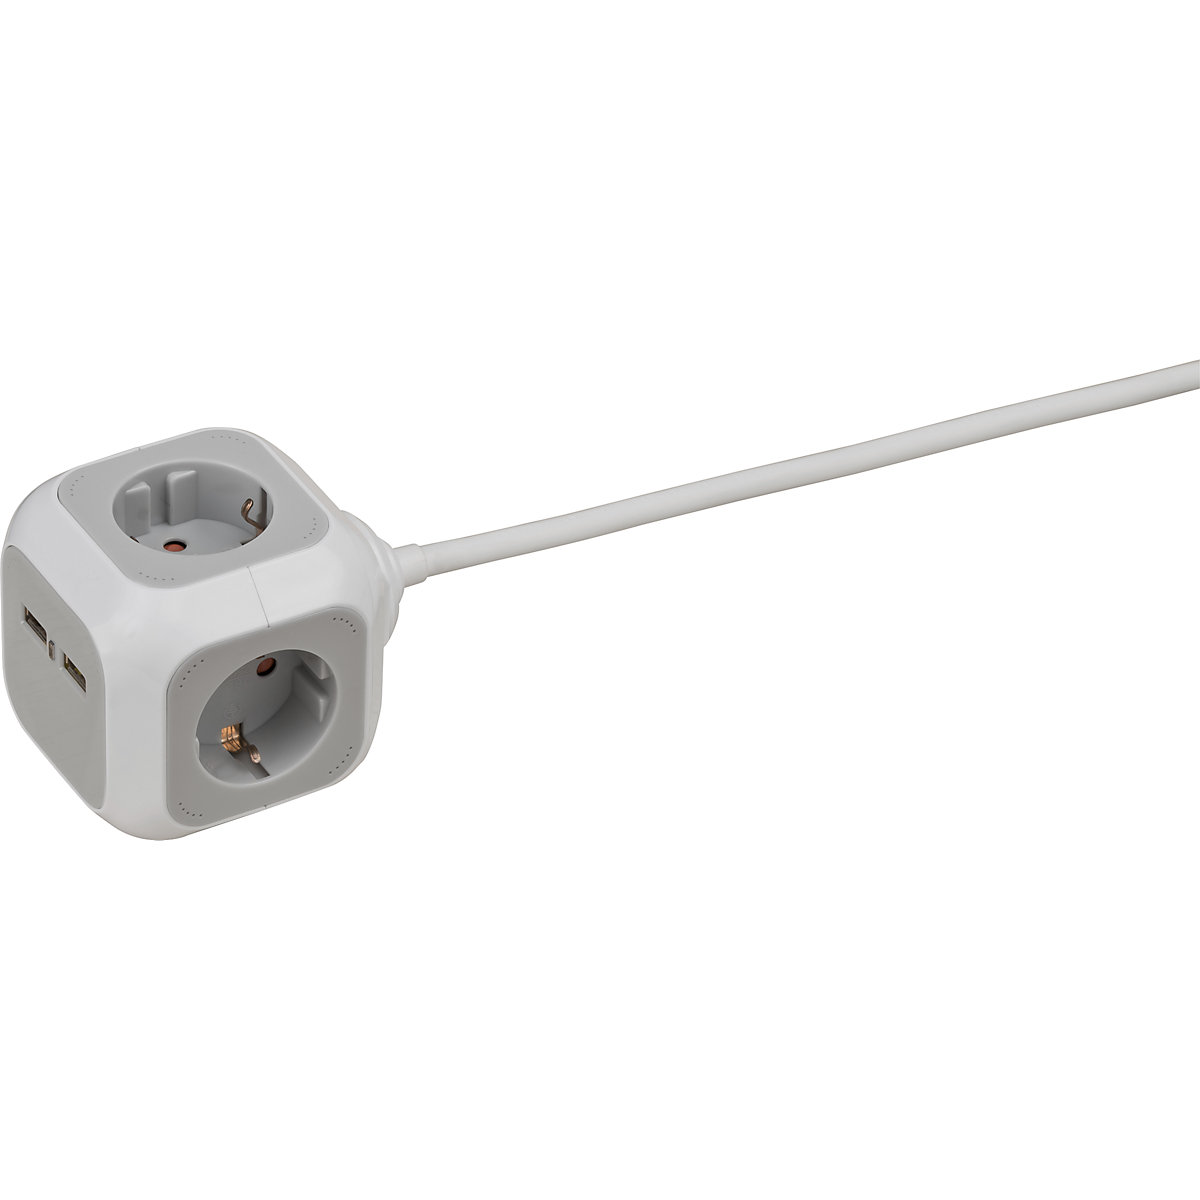 ALEA-Power socket strip with USB charger – Brennenstuhl (Product illustration 2)-1